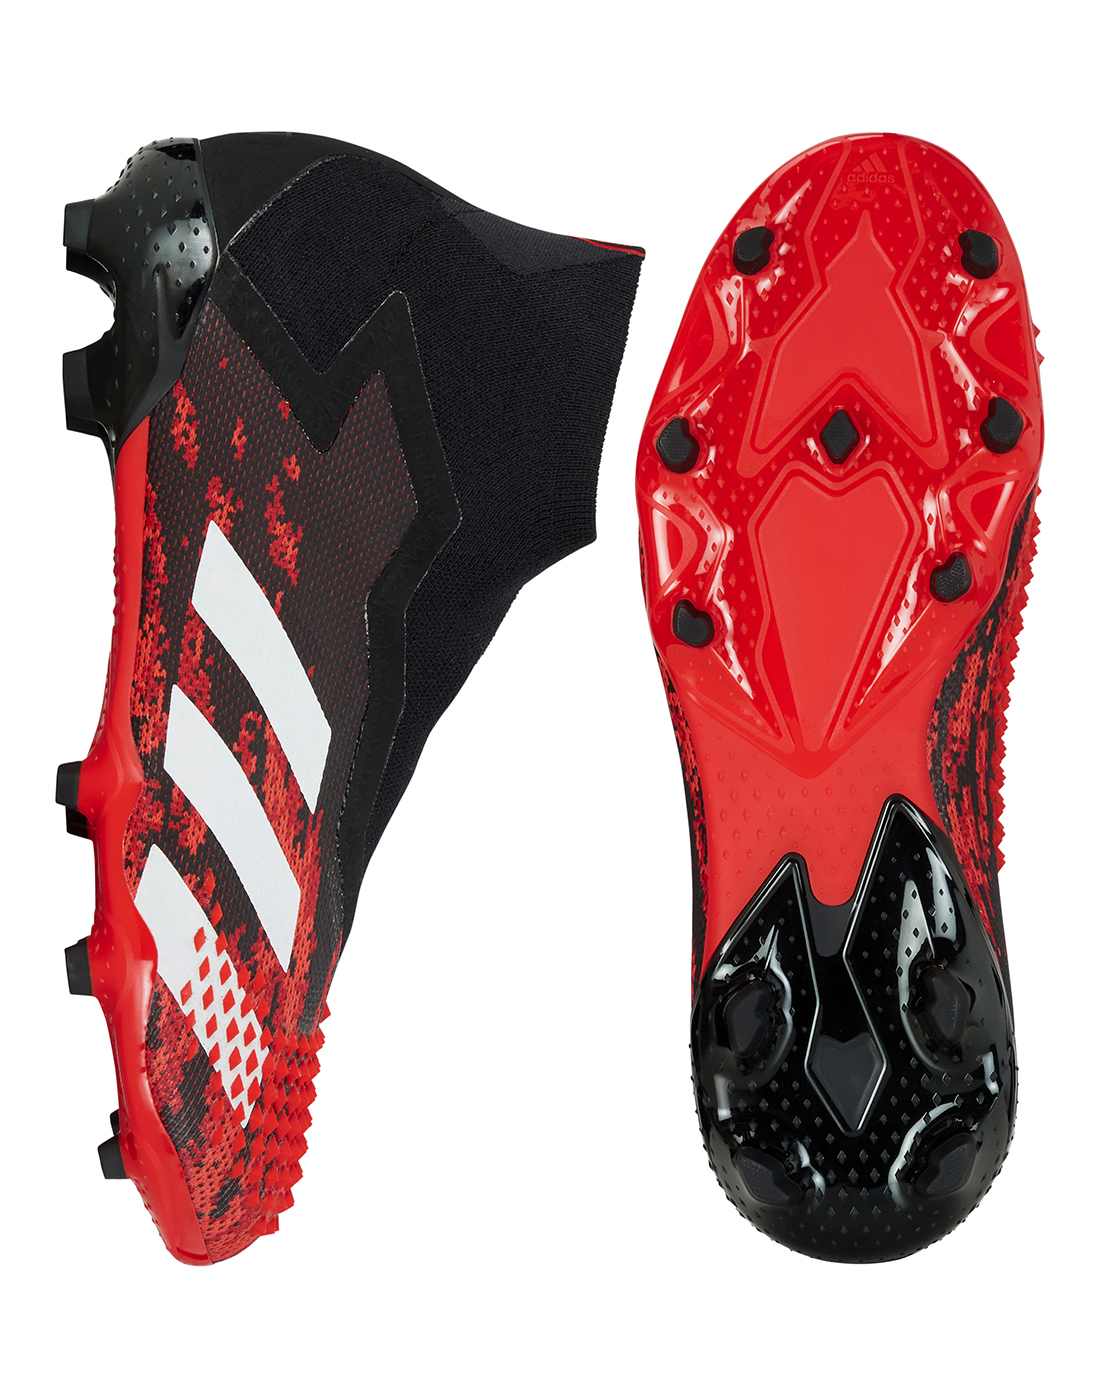 Adidas Updates Its Predator Soccer Boot With 'Demonskin.